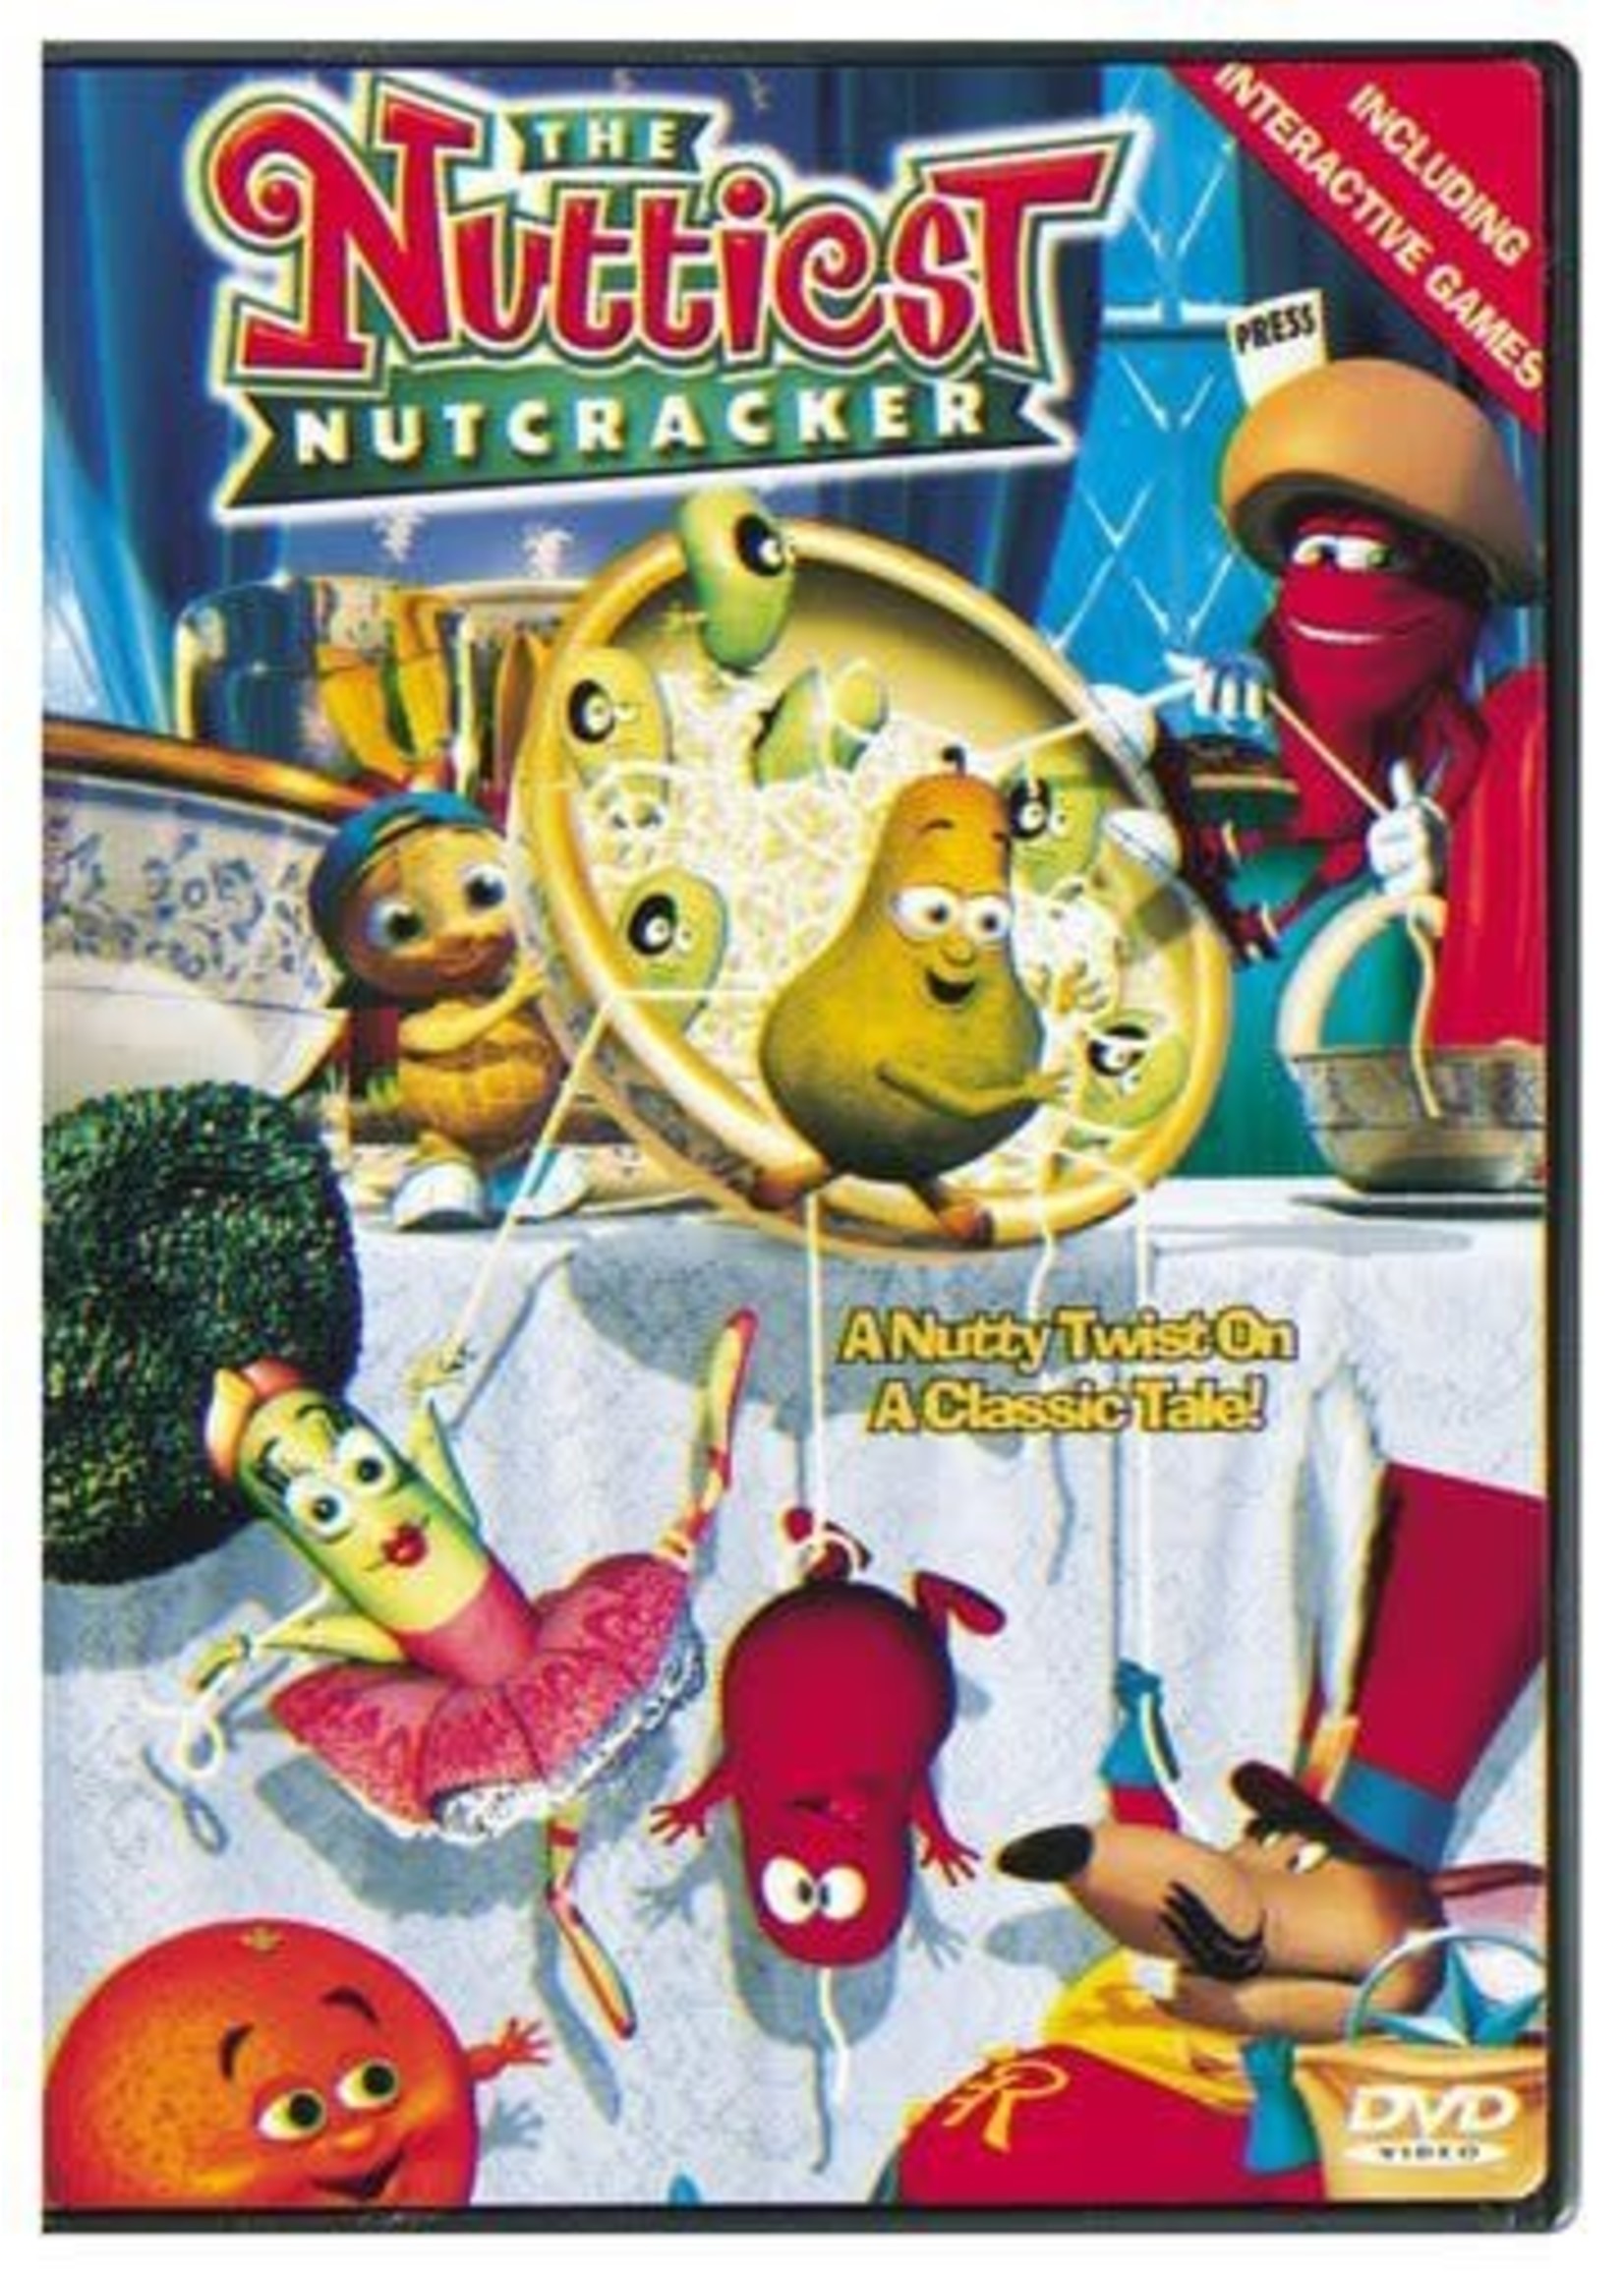 COL D25189D Nuttiest Nutcracker DVD - P&S, DD 5.1 & DDS & English Subtitles - NLA